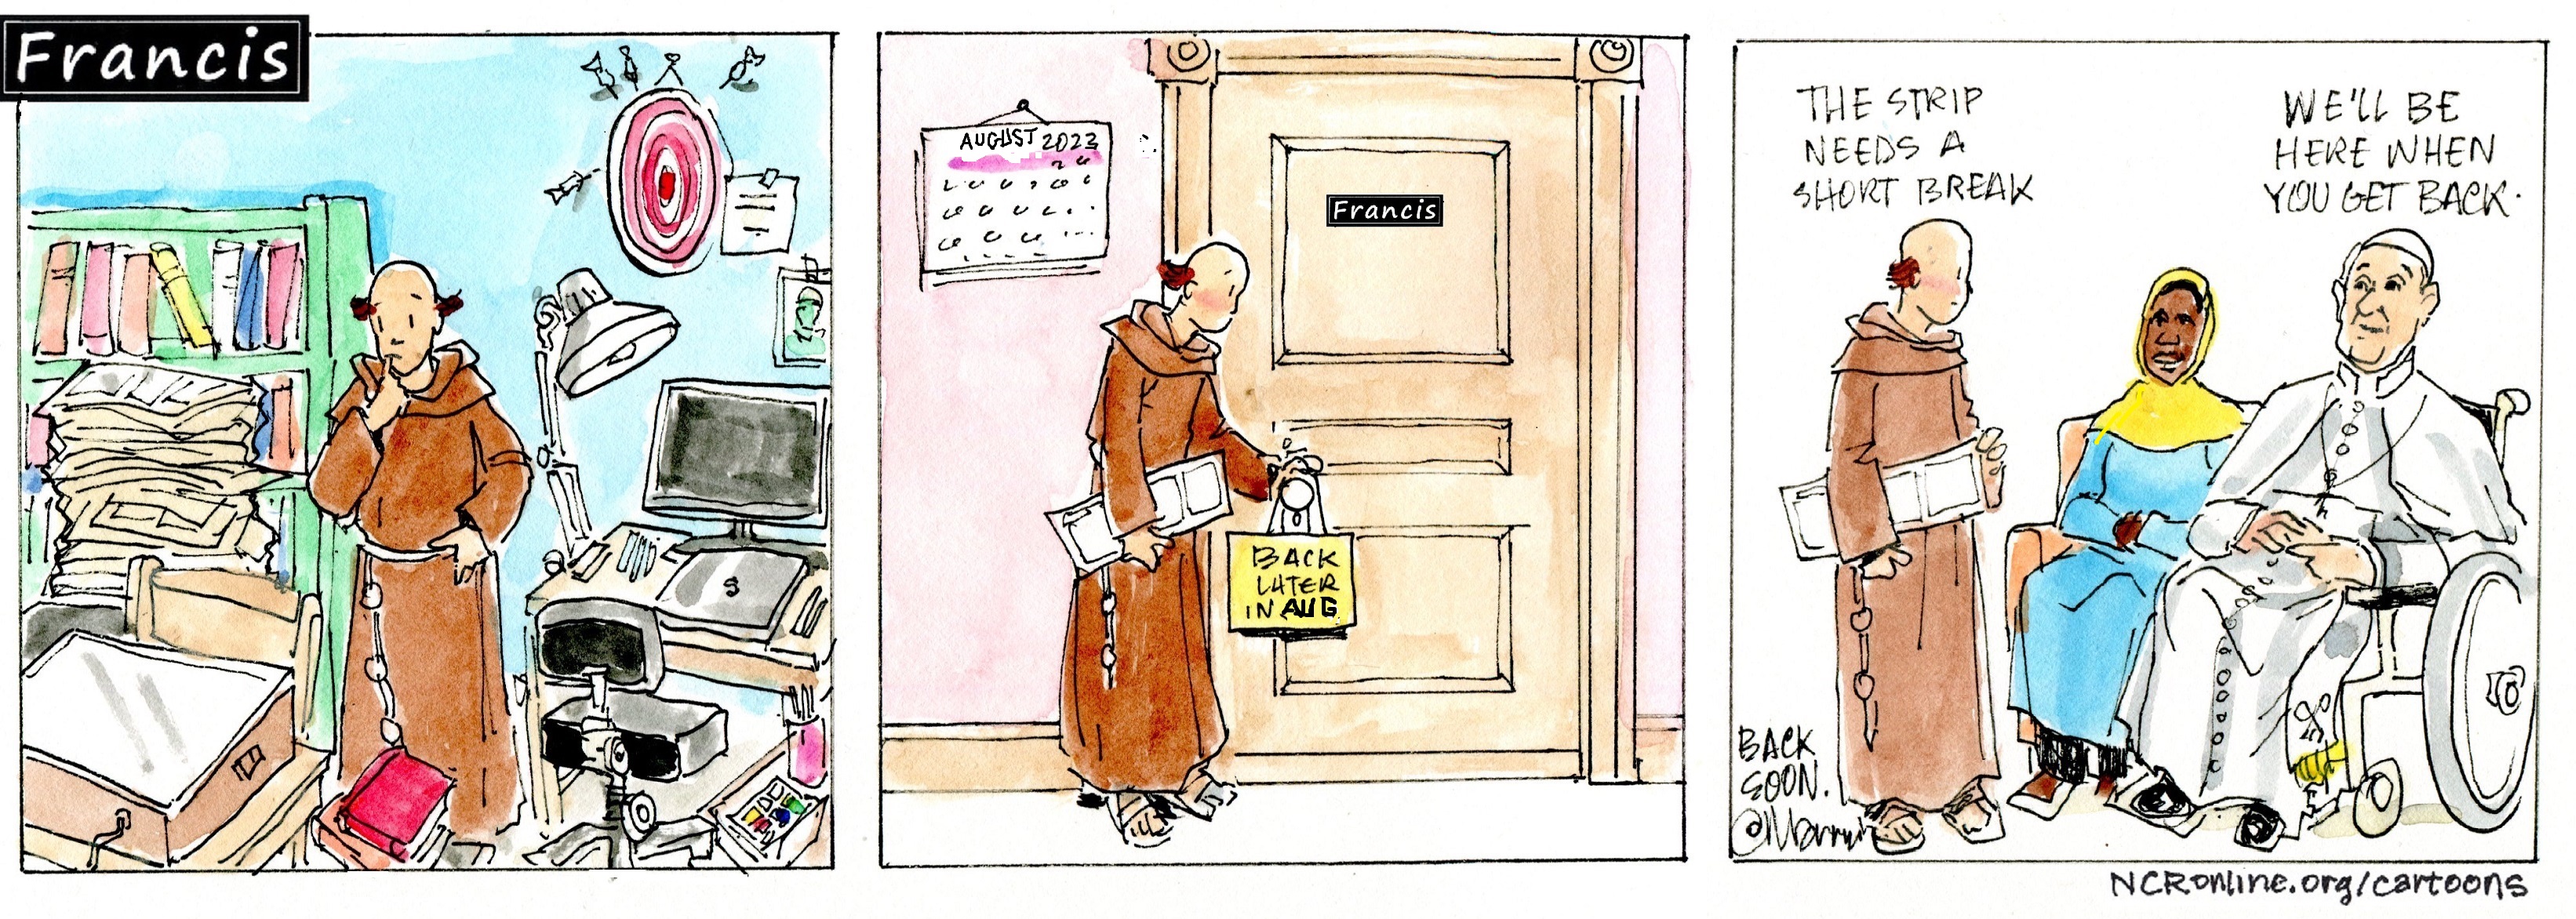 Francis, the comic strip: The strip needs a short break. 